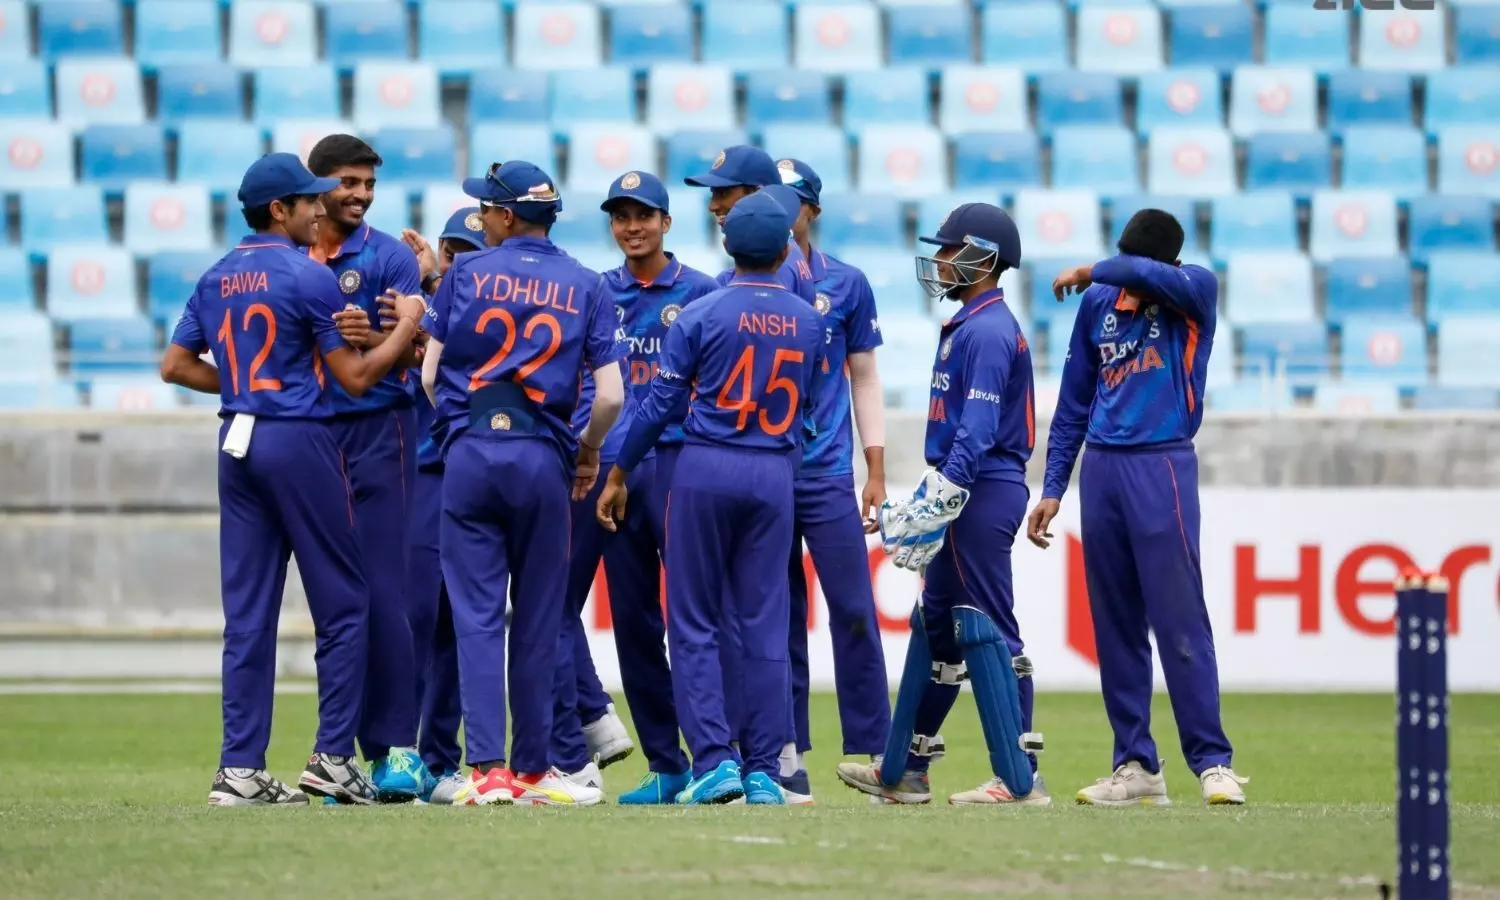 U19 World Cup: India vs West Indies Warm-up Match - Live Scores, Updates